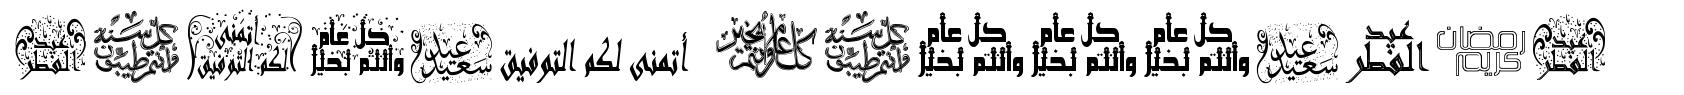 Arabic Greetings шрифт